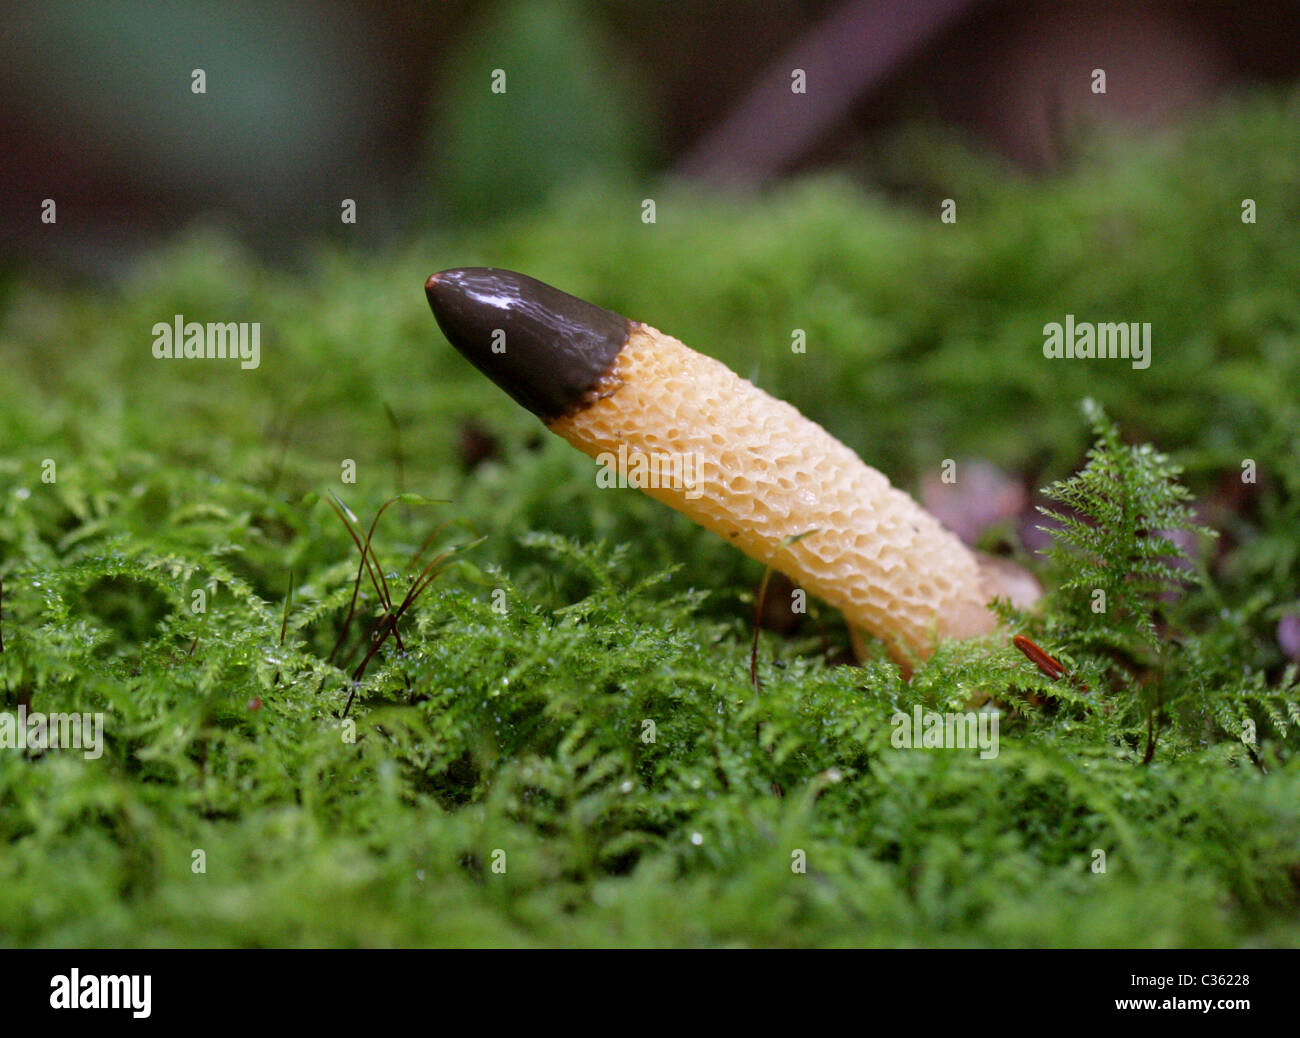 Dog Stinkhorn, Mutinus caninus, Phallaceae. Growing in Woodland Moss. Stock Photo